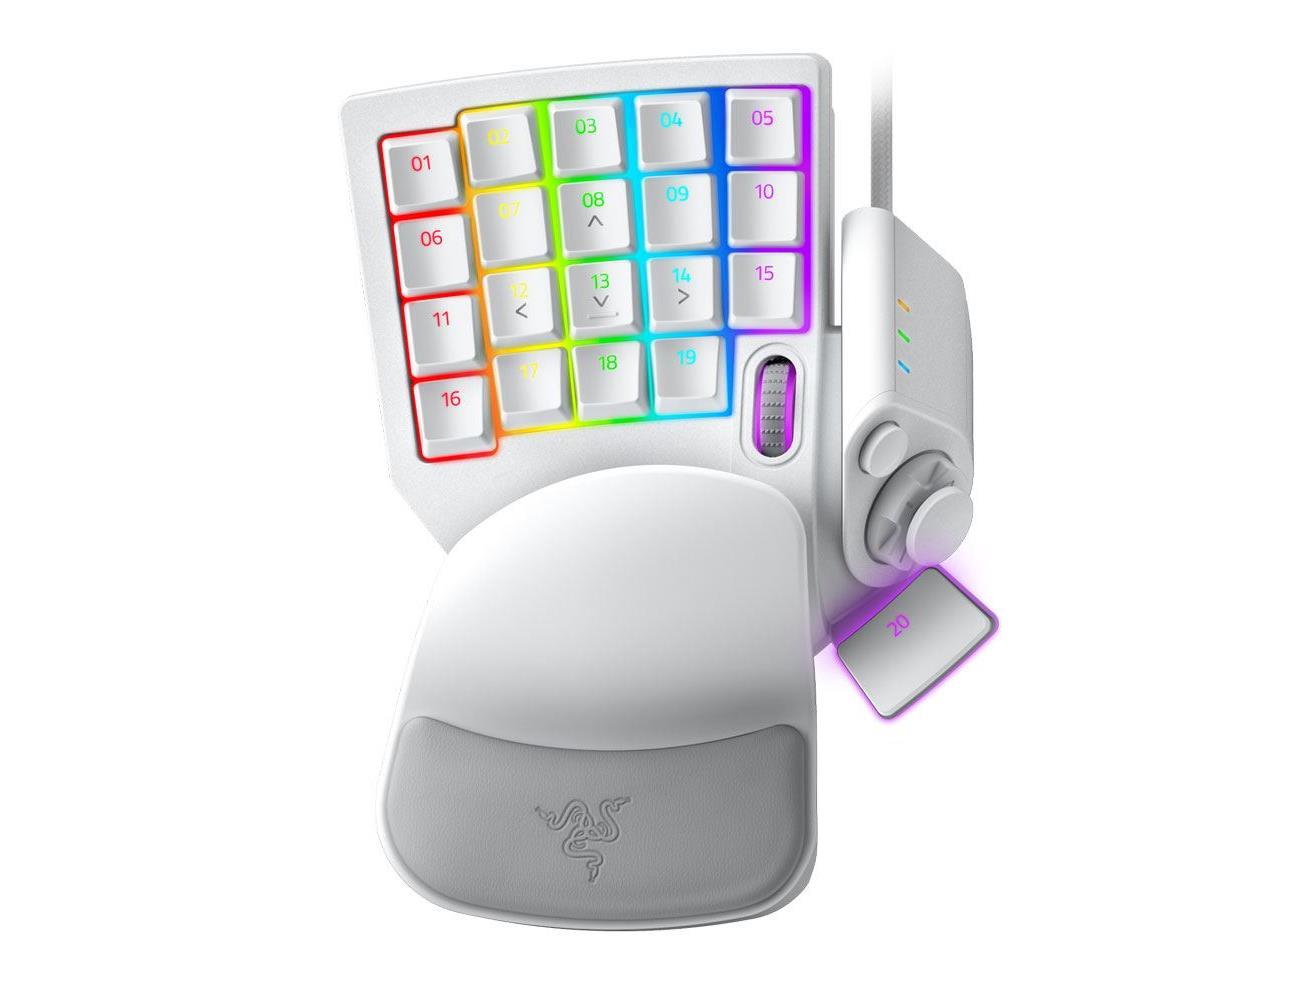 Razer Tartarus Pro Gaming Keypad: Analog-Optical Key Switches, 32 Programmable Keys, Chroma RGB - Mercury White